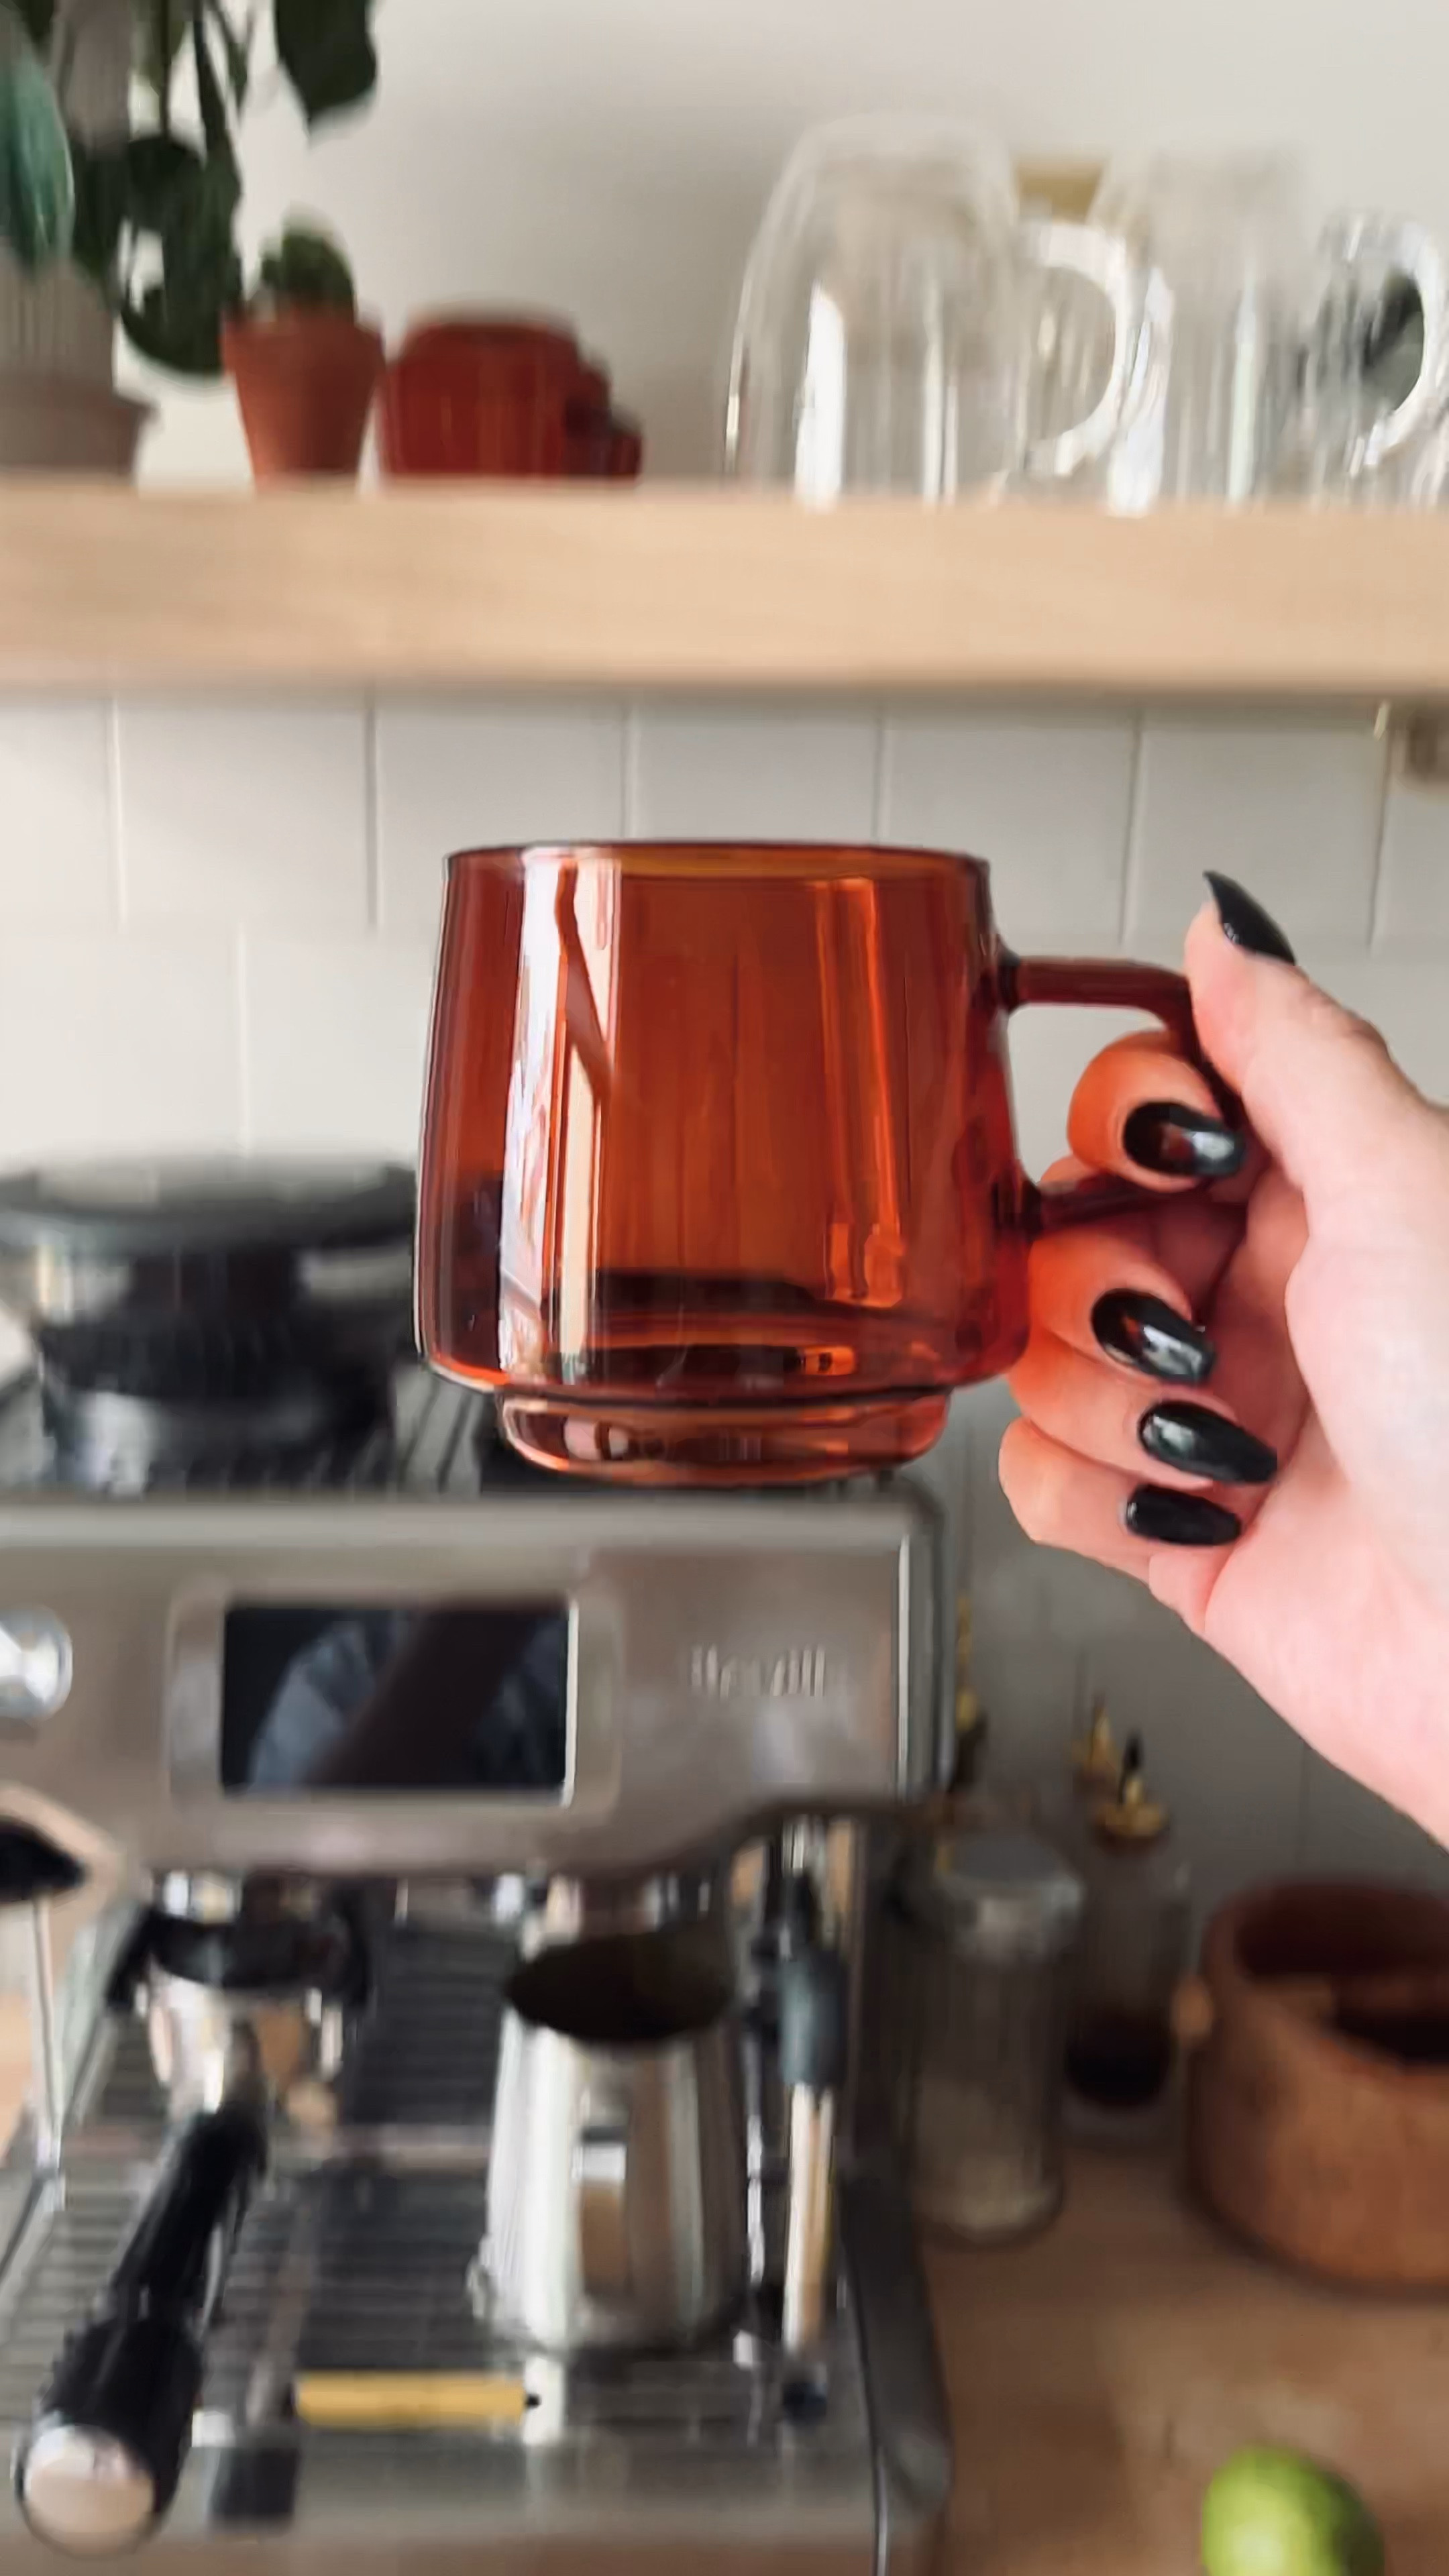 Amber Glass Mug by Schoolhouse